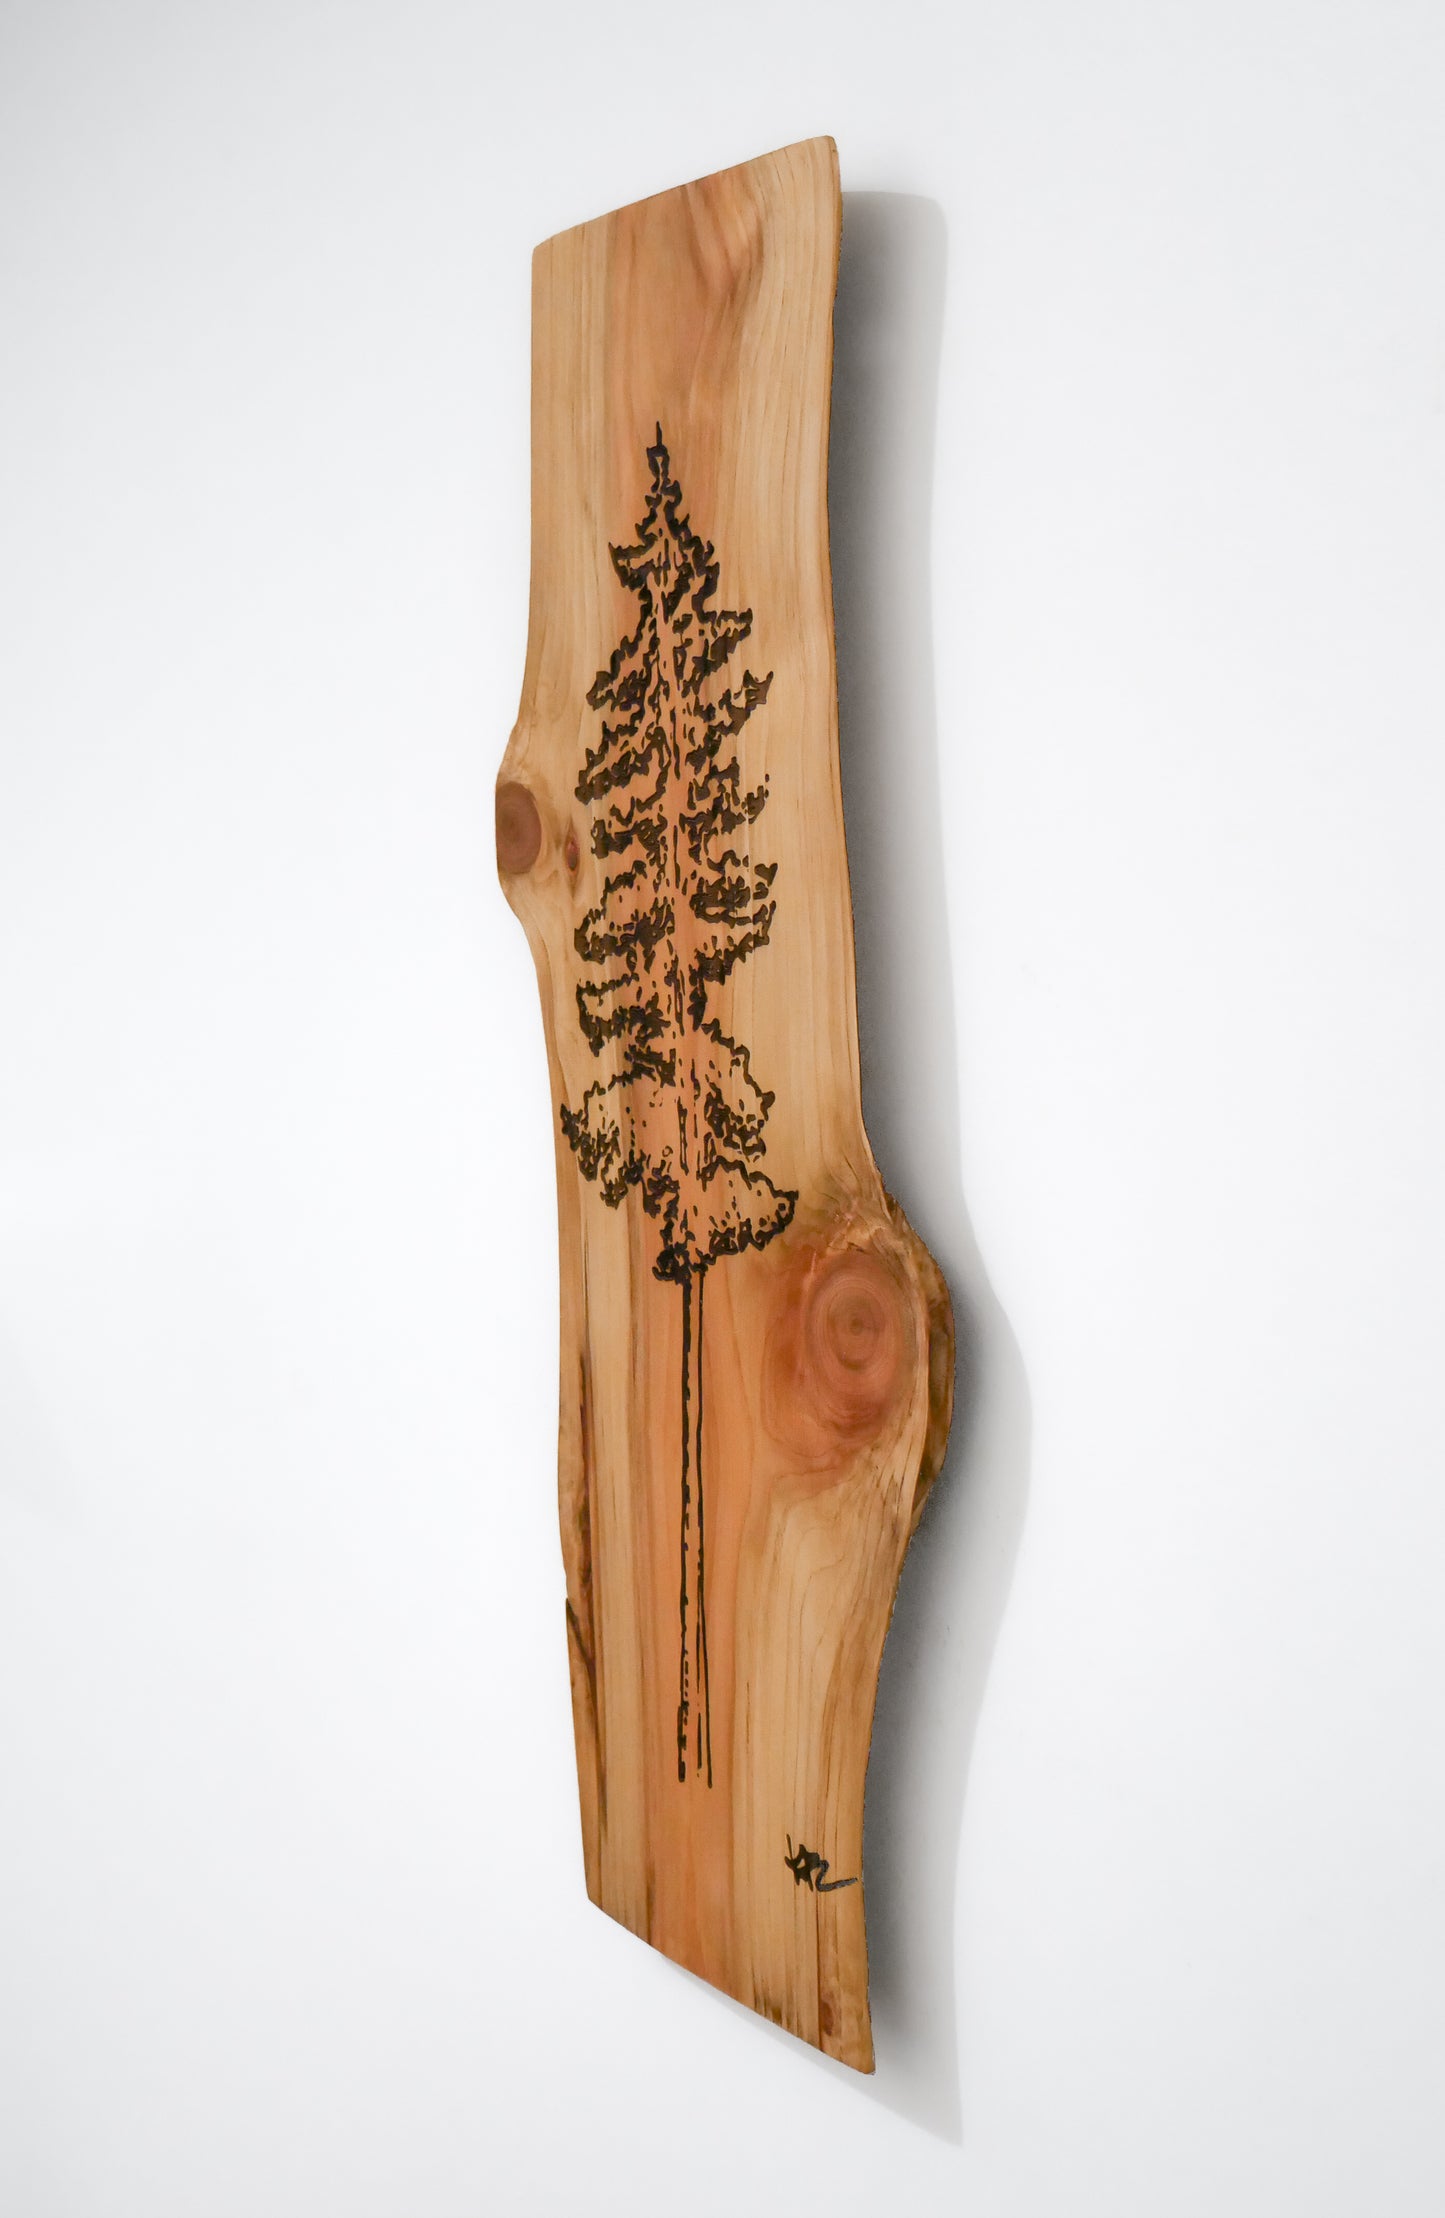 Ponderosa Pine, Cedar Engraving (Local Artist)